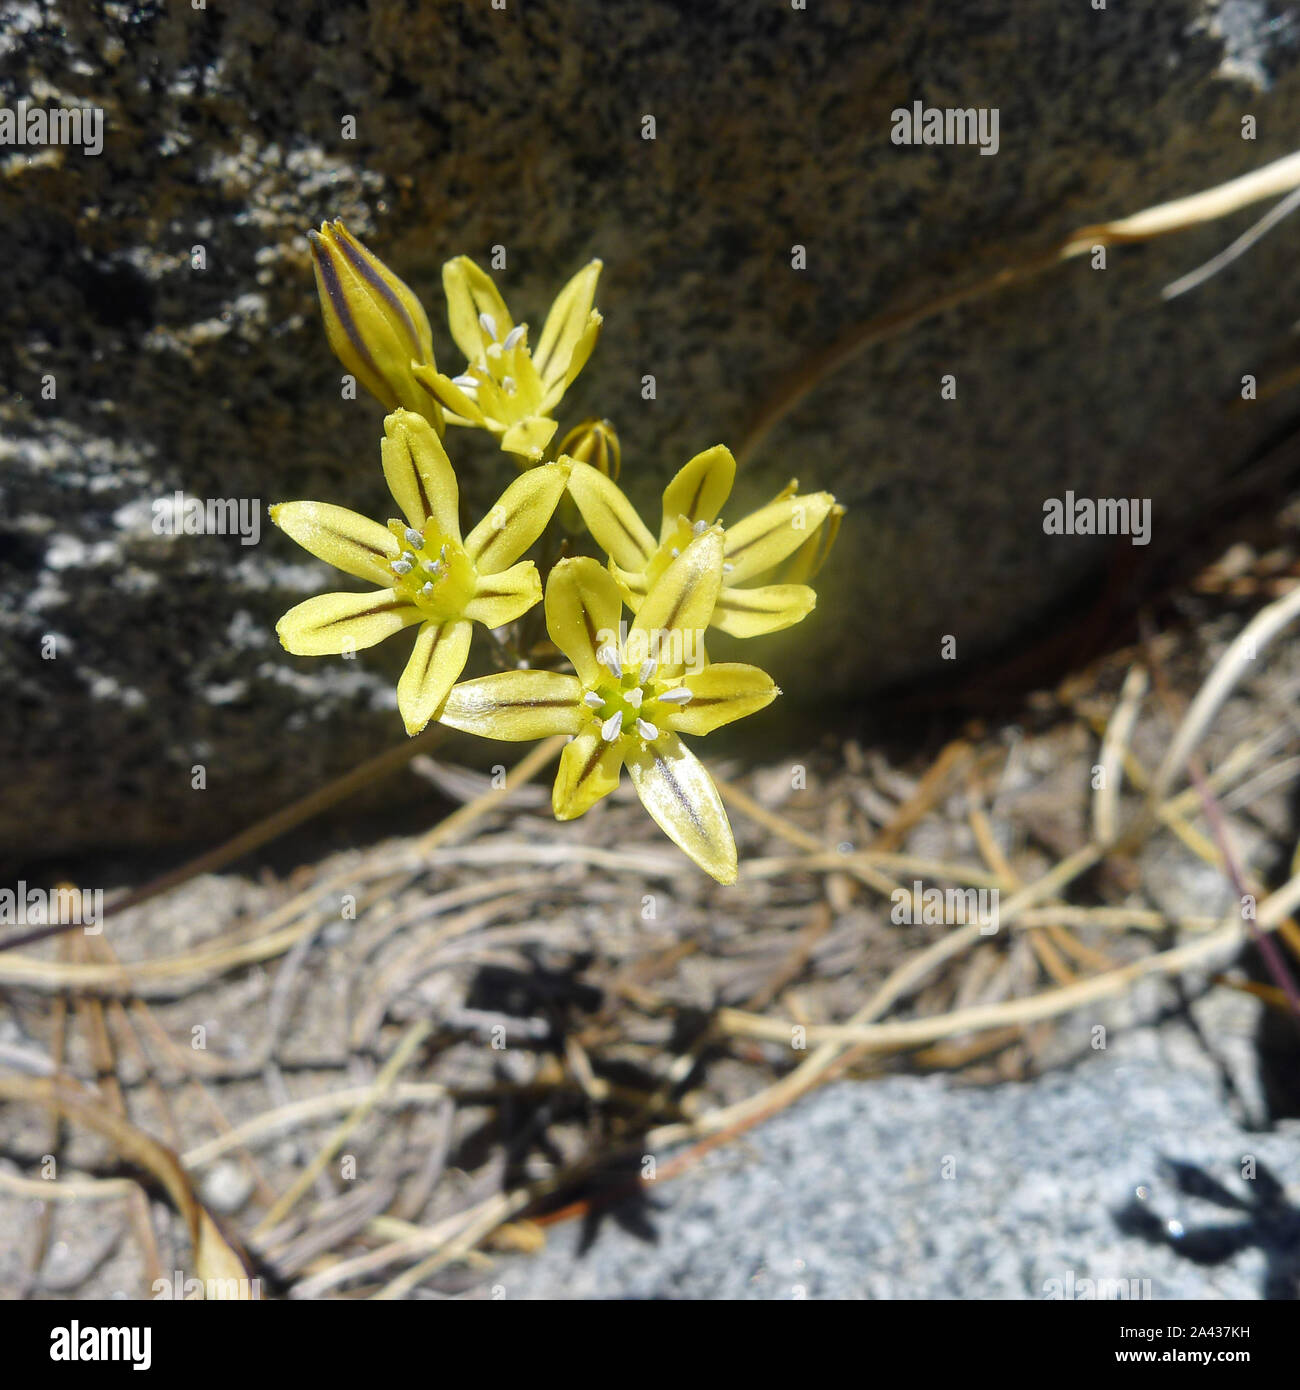 Triteleia ixioides, known as prettyface or golden star is a monocotyledon flowering plant in the genus Triteleia. Emerald Bay State Park, Lake Tahoe. Stock Photo